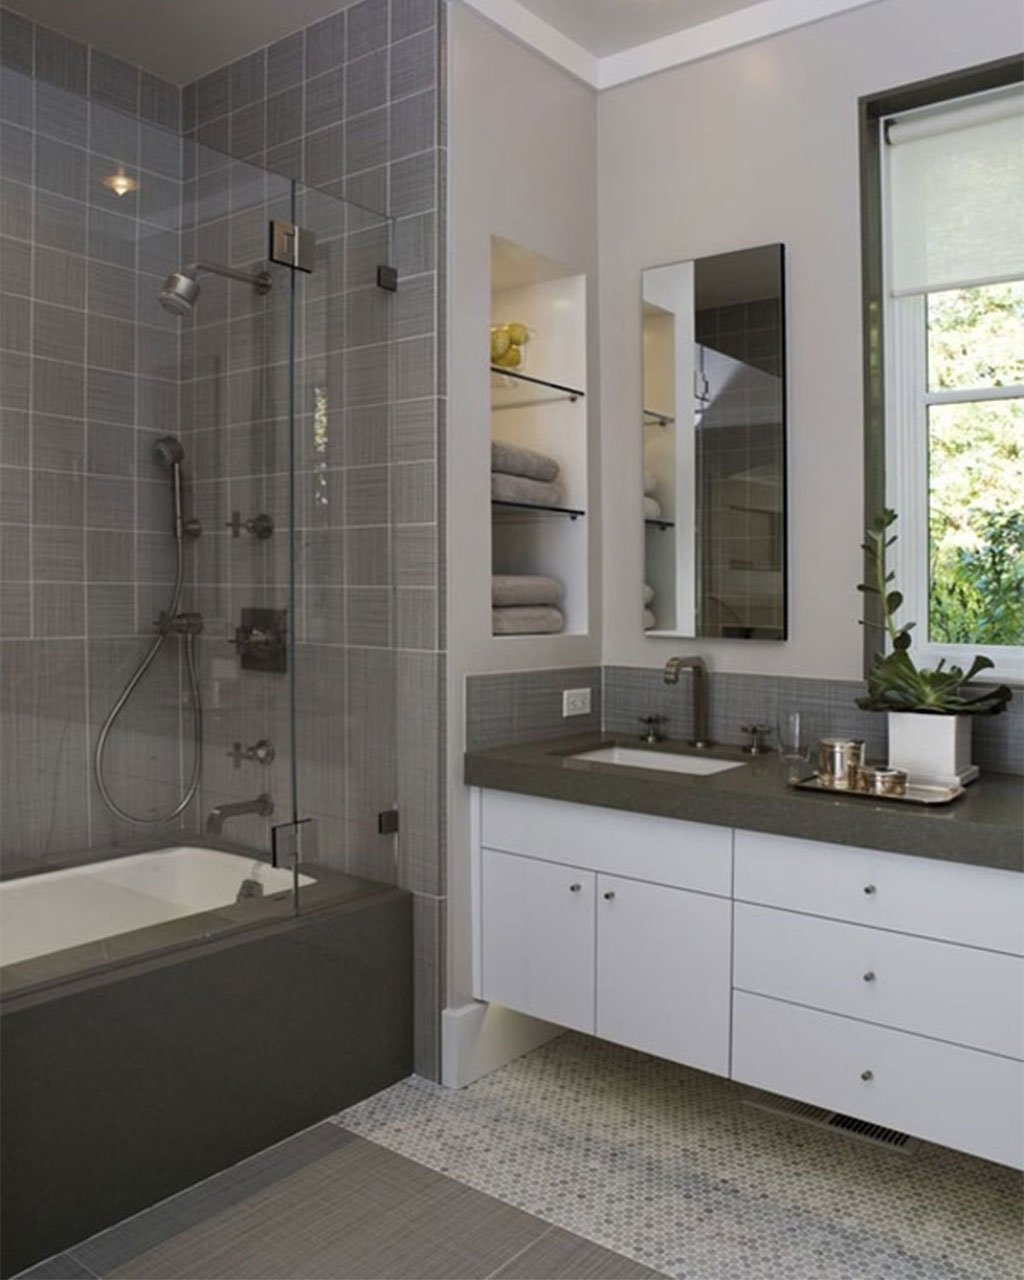 10 Gorgeous Bathroom Design Ideas On A Budget bathroom design remodeling ideas on budget decobizz 6 2022